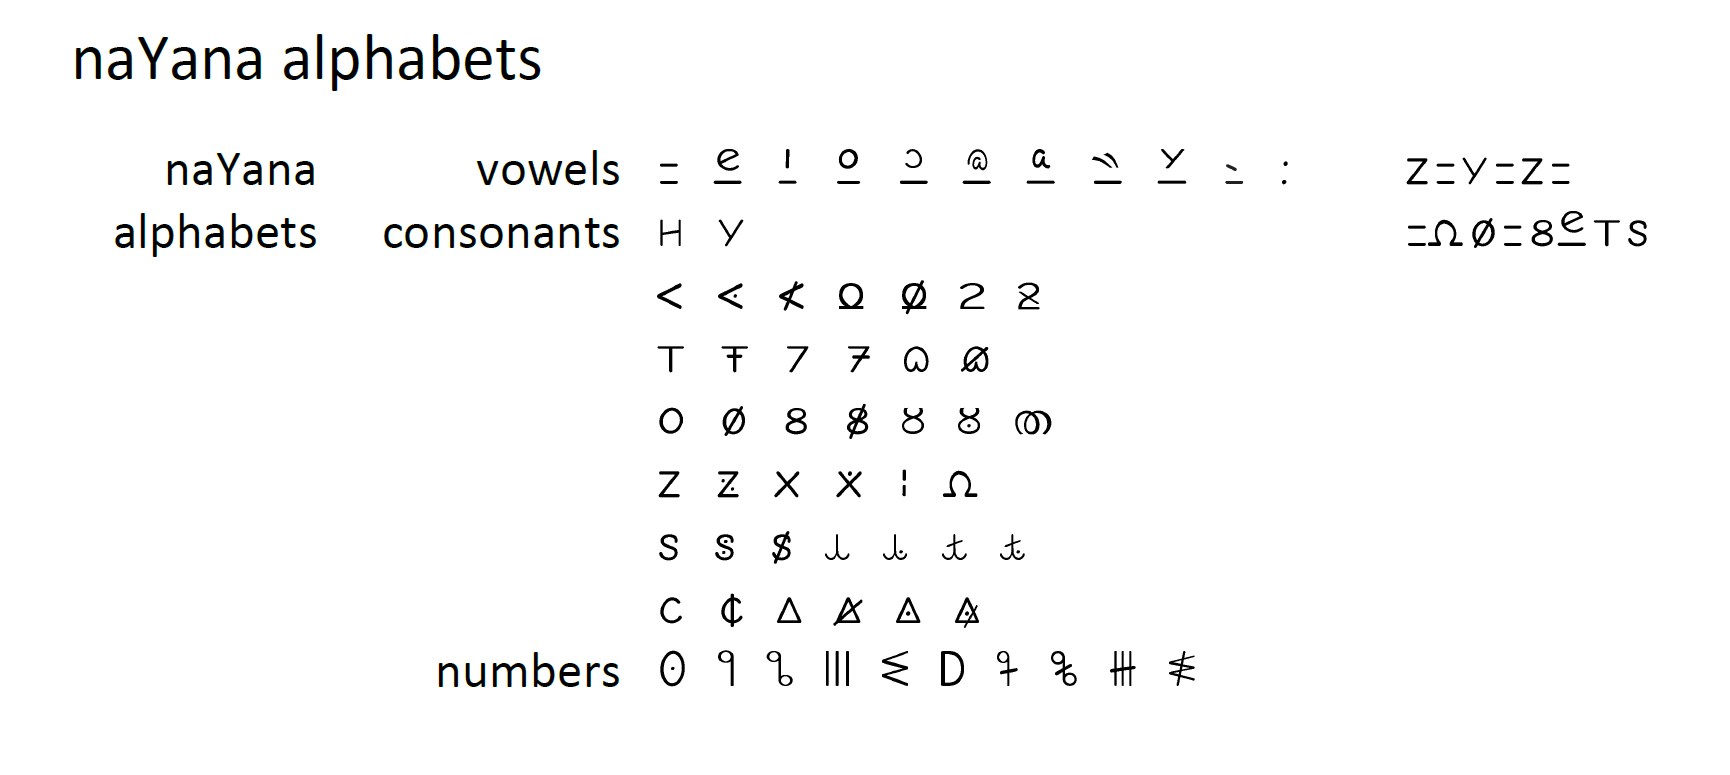 naYana alphabets